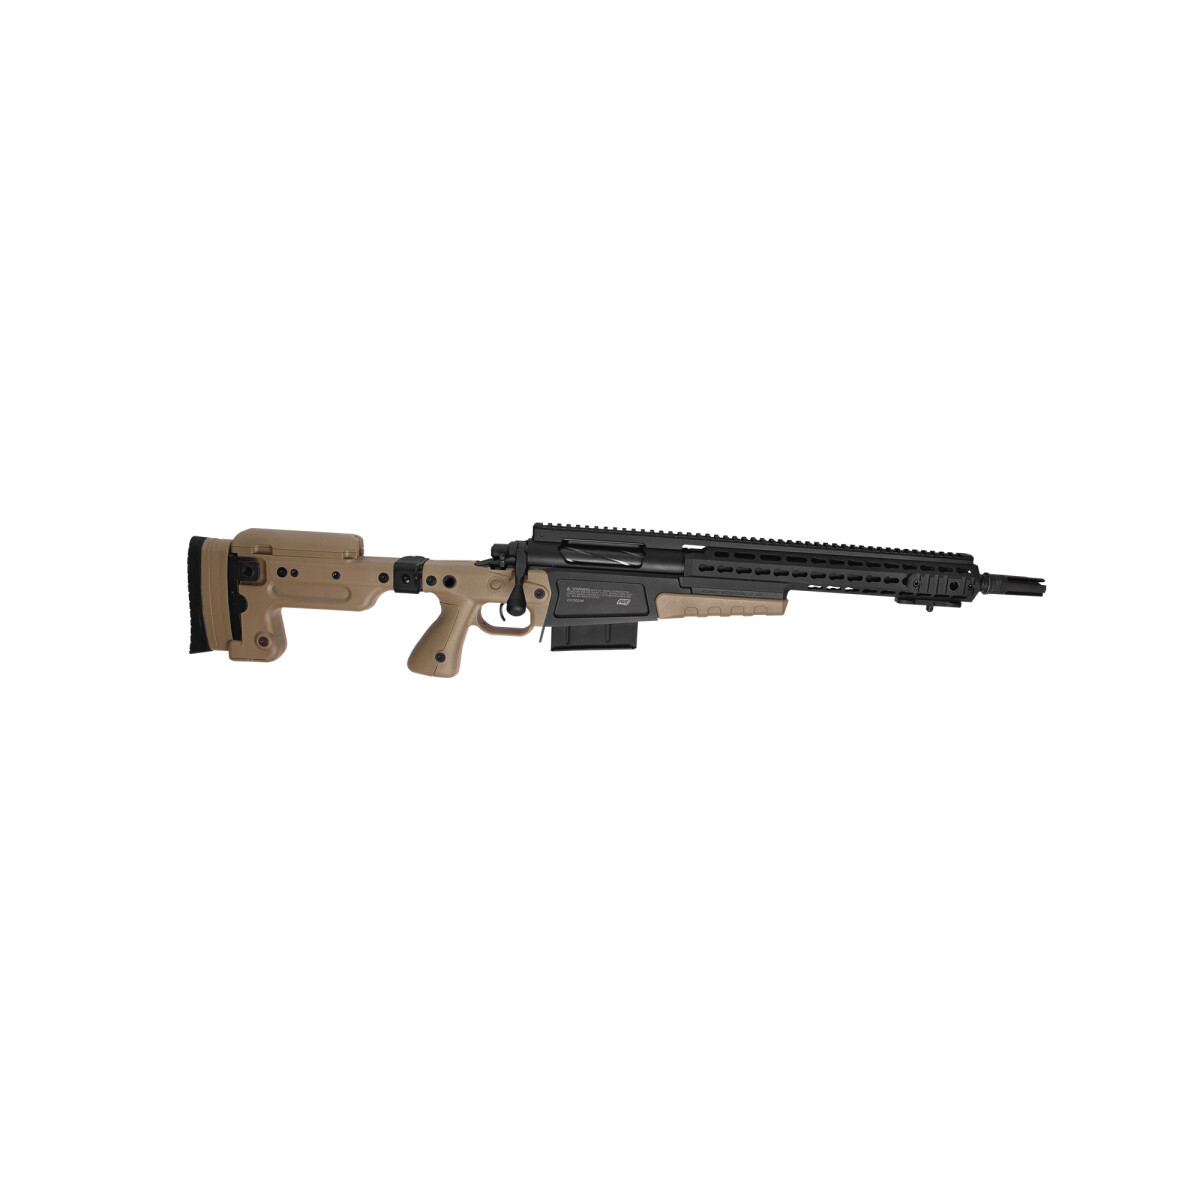 Rifle de francotirador AI MK13 Compact - Tan & Black 